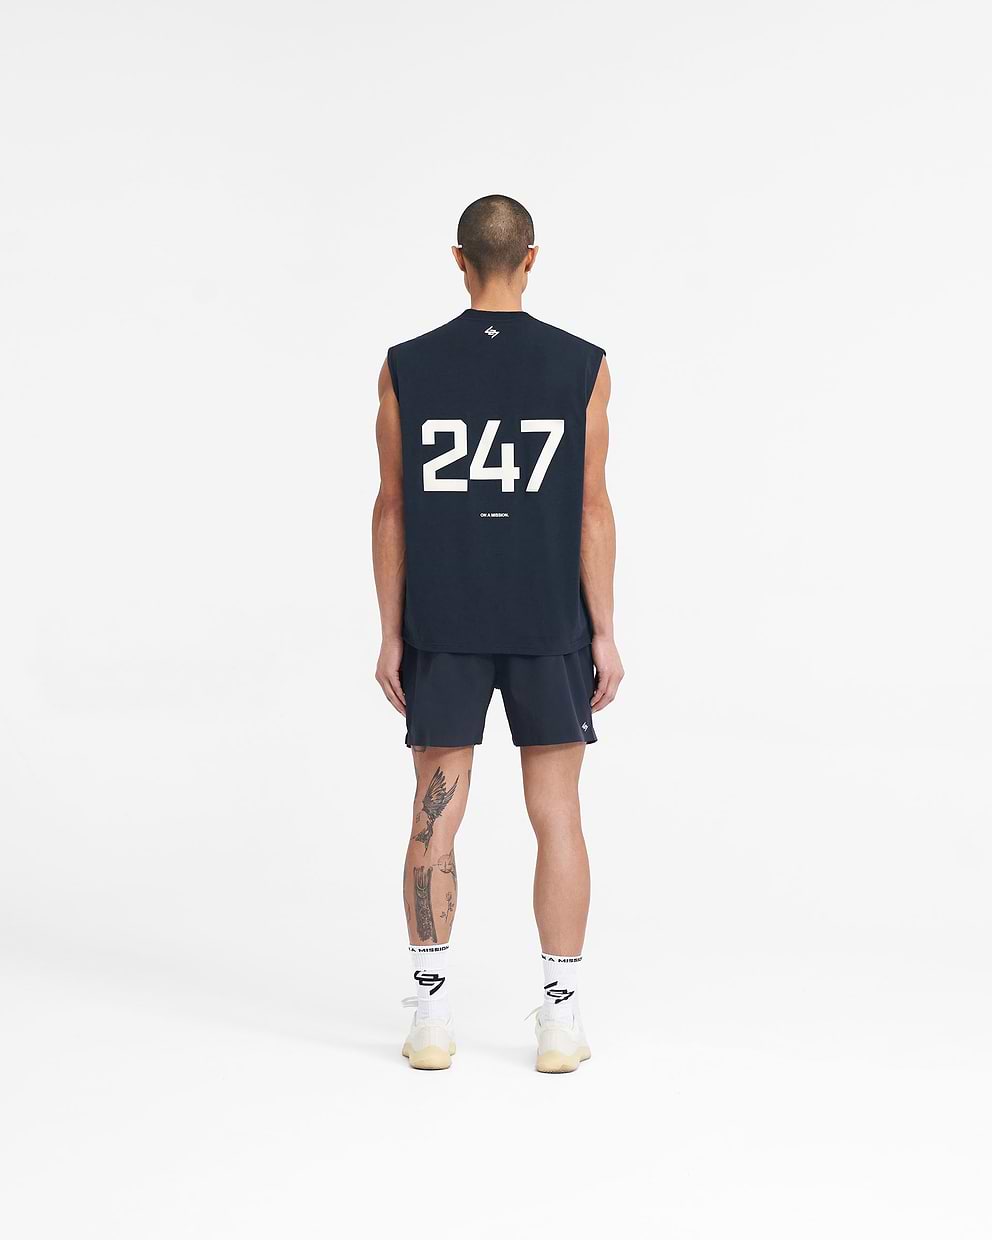 247 Fused Shorts - Navy